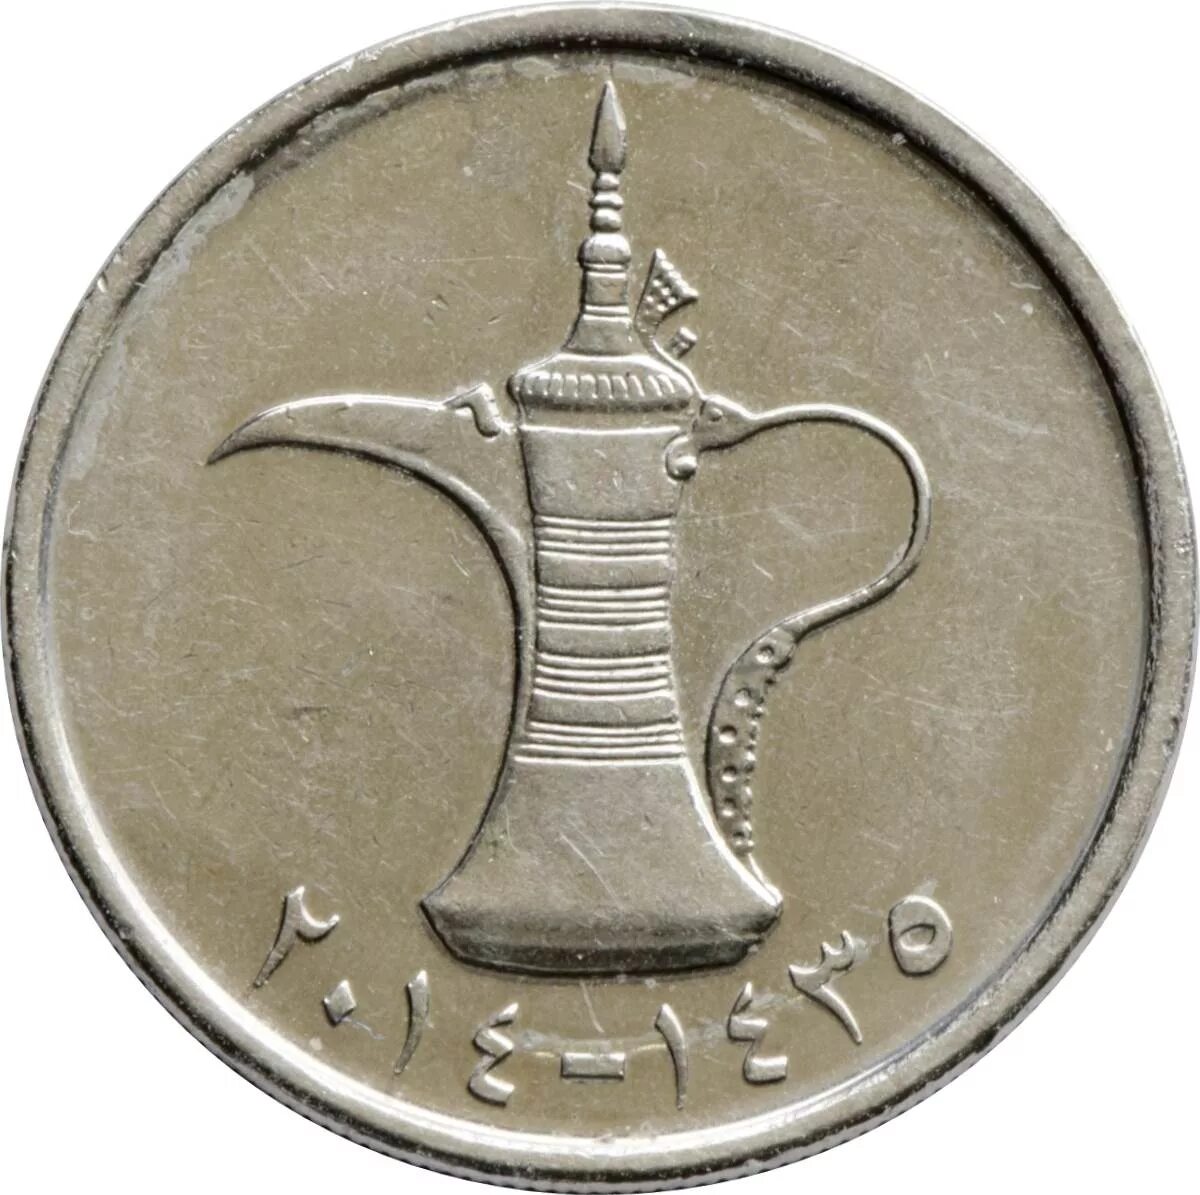 Uae 1. Монета арабская United arab Emirates. United arab Emirates монета. United arab Emirates монета 1. Монеты ОАЭ 1 дирхам.